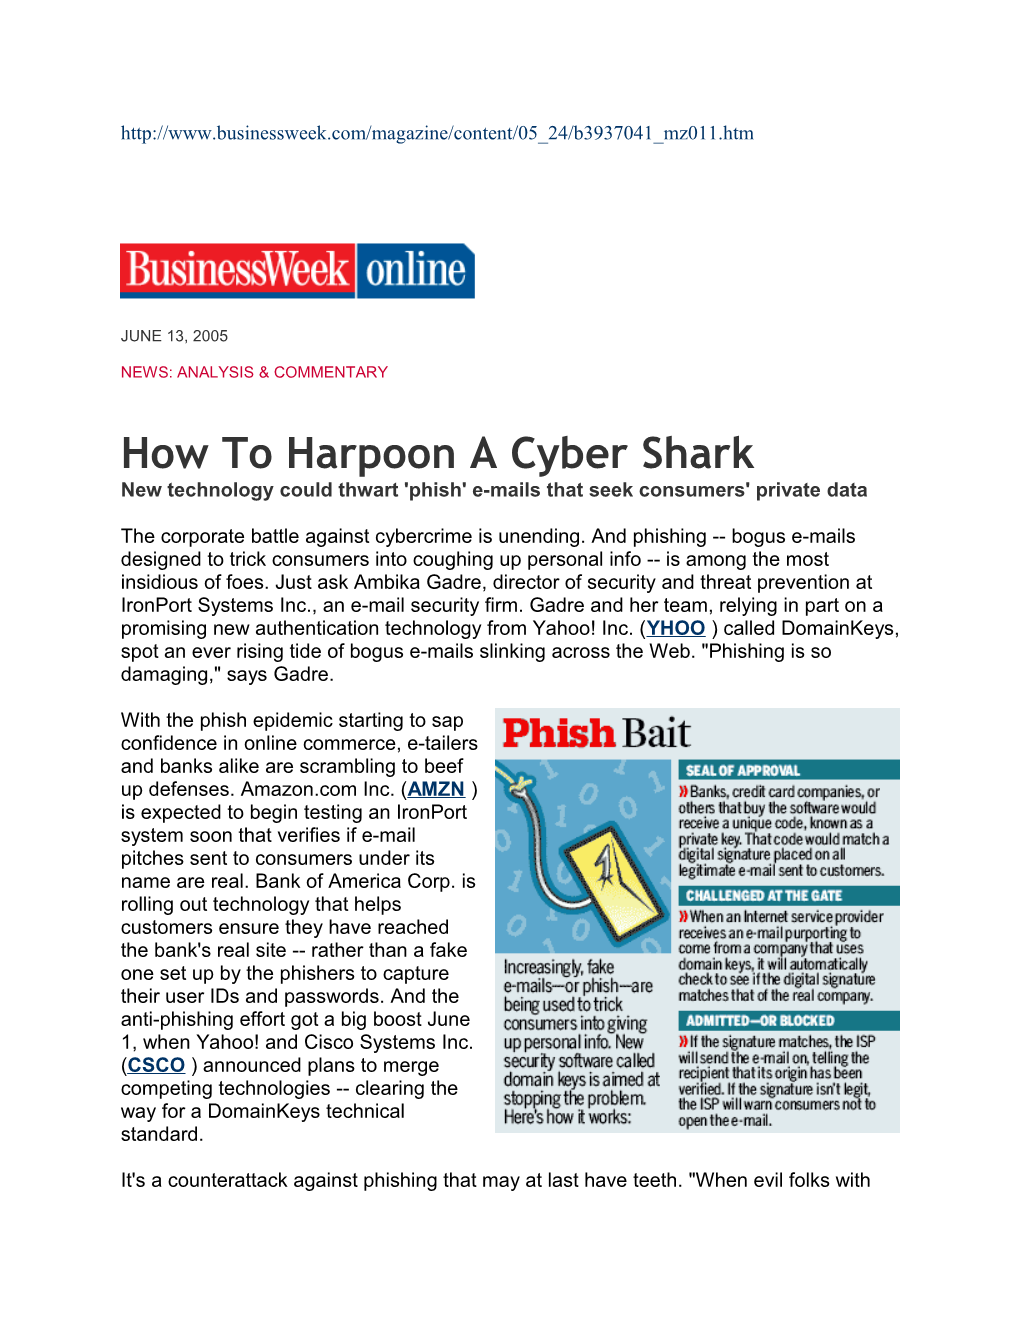 How to Harpoon a Cyber Shark - Business Week